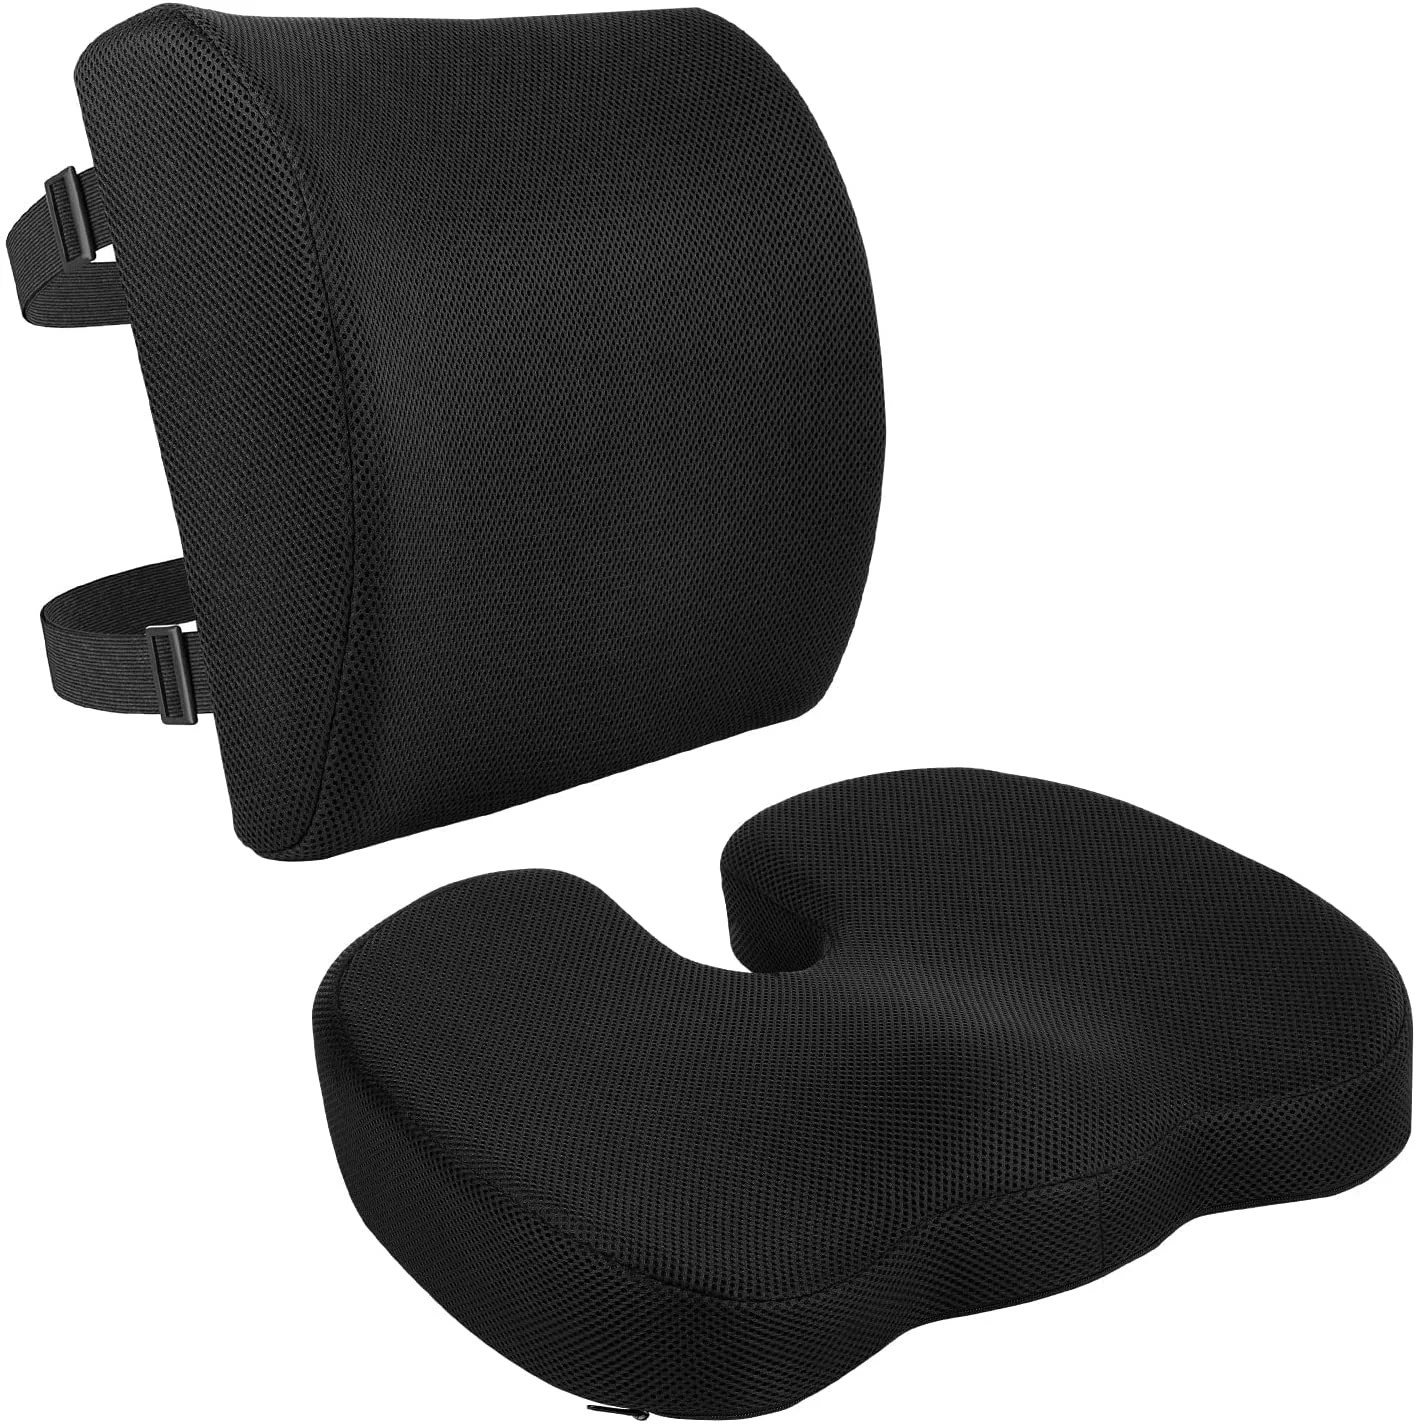 Tush Cush Extra Firm Seat Cushion - Black